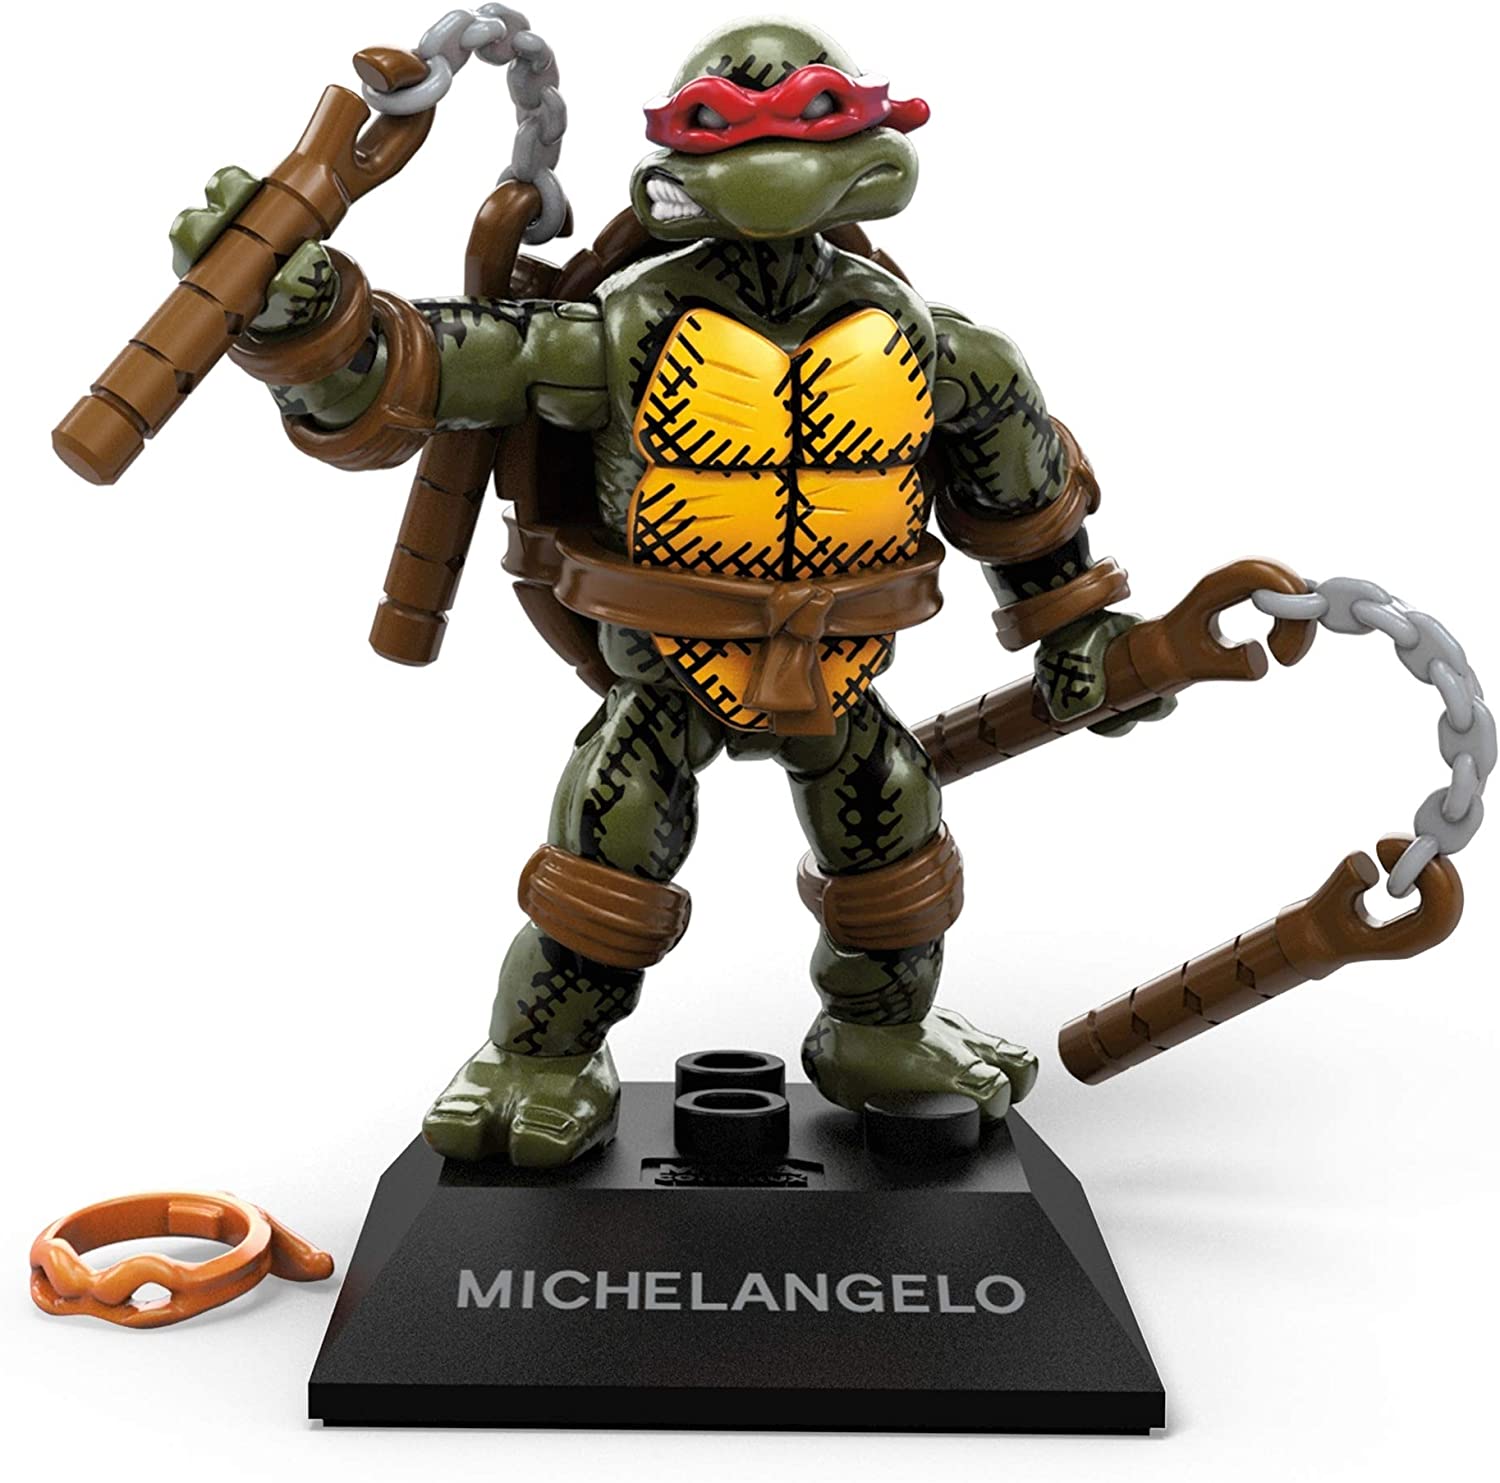 Michelangelo - Mega Construx TMNT Black Series Figure Pack